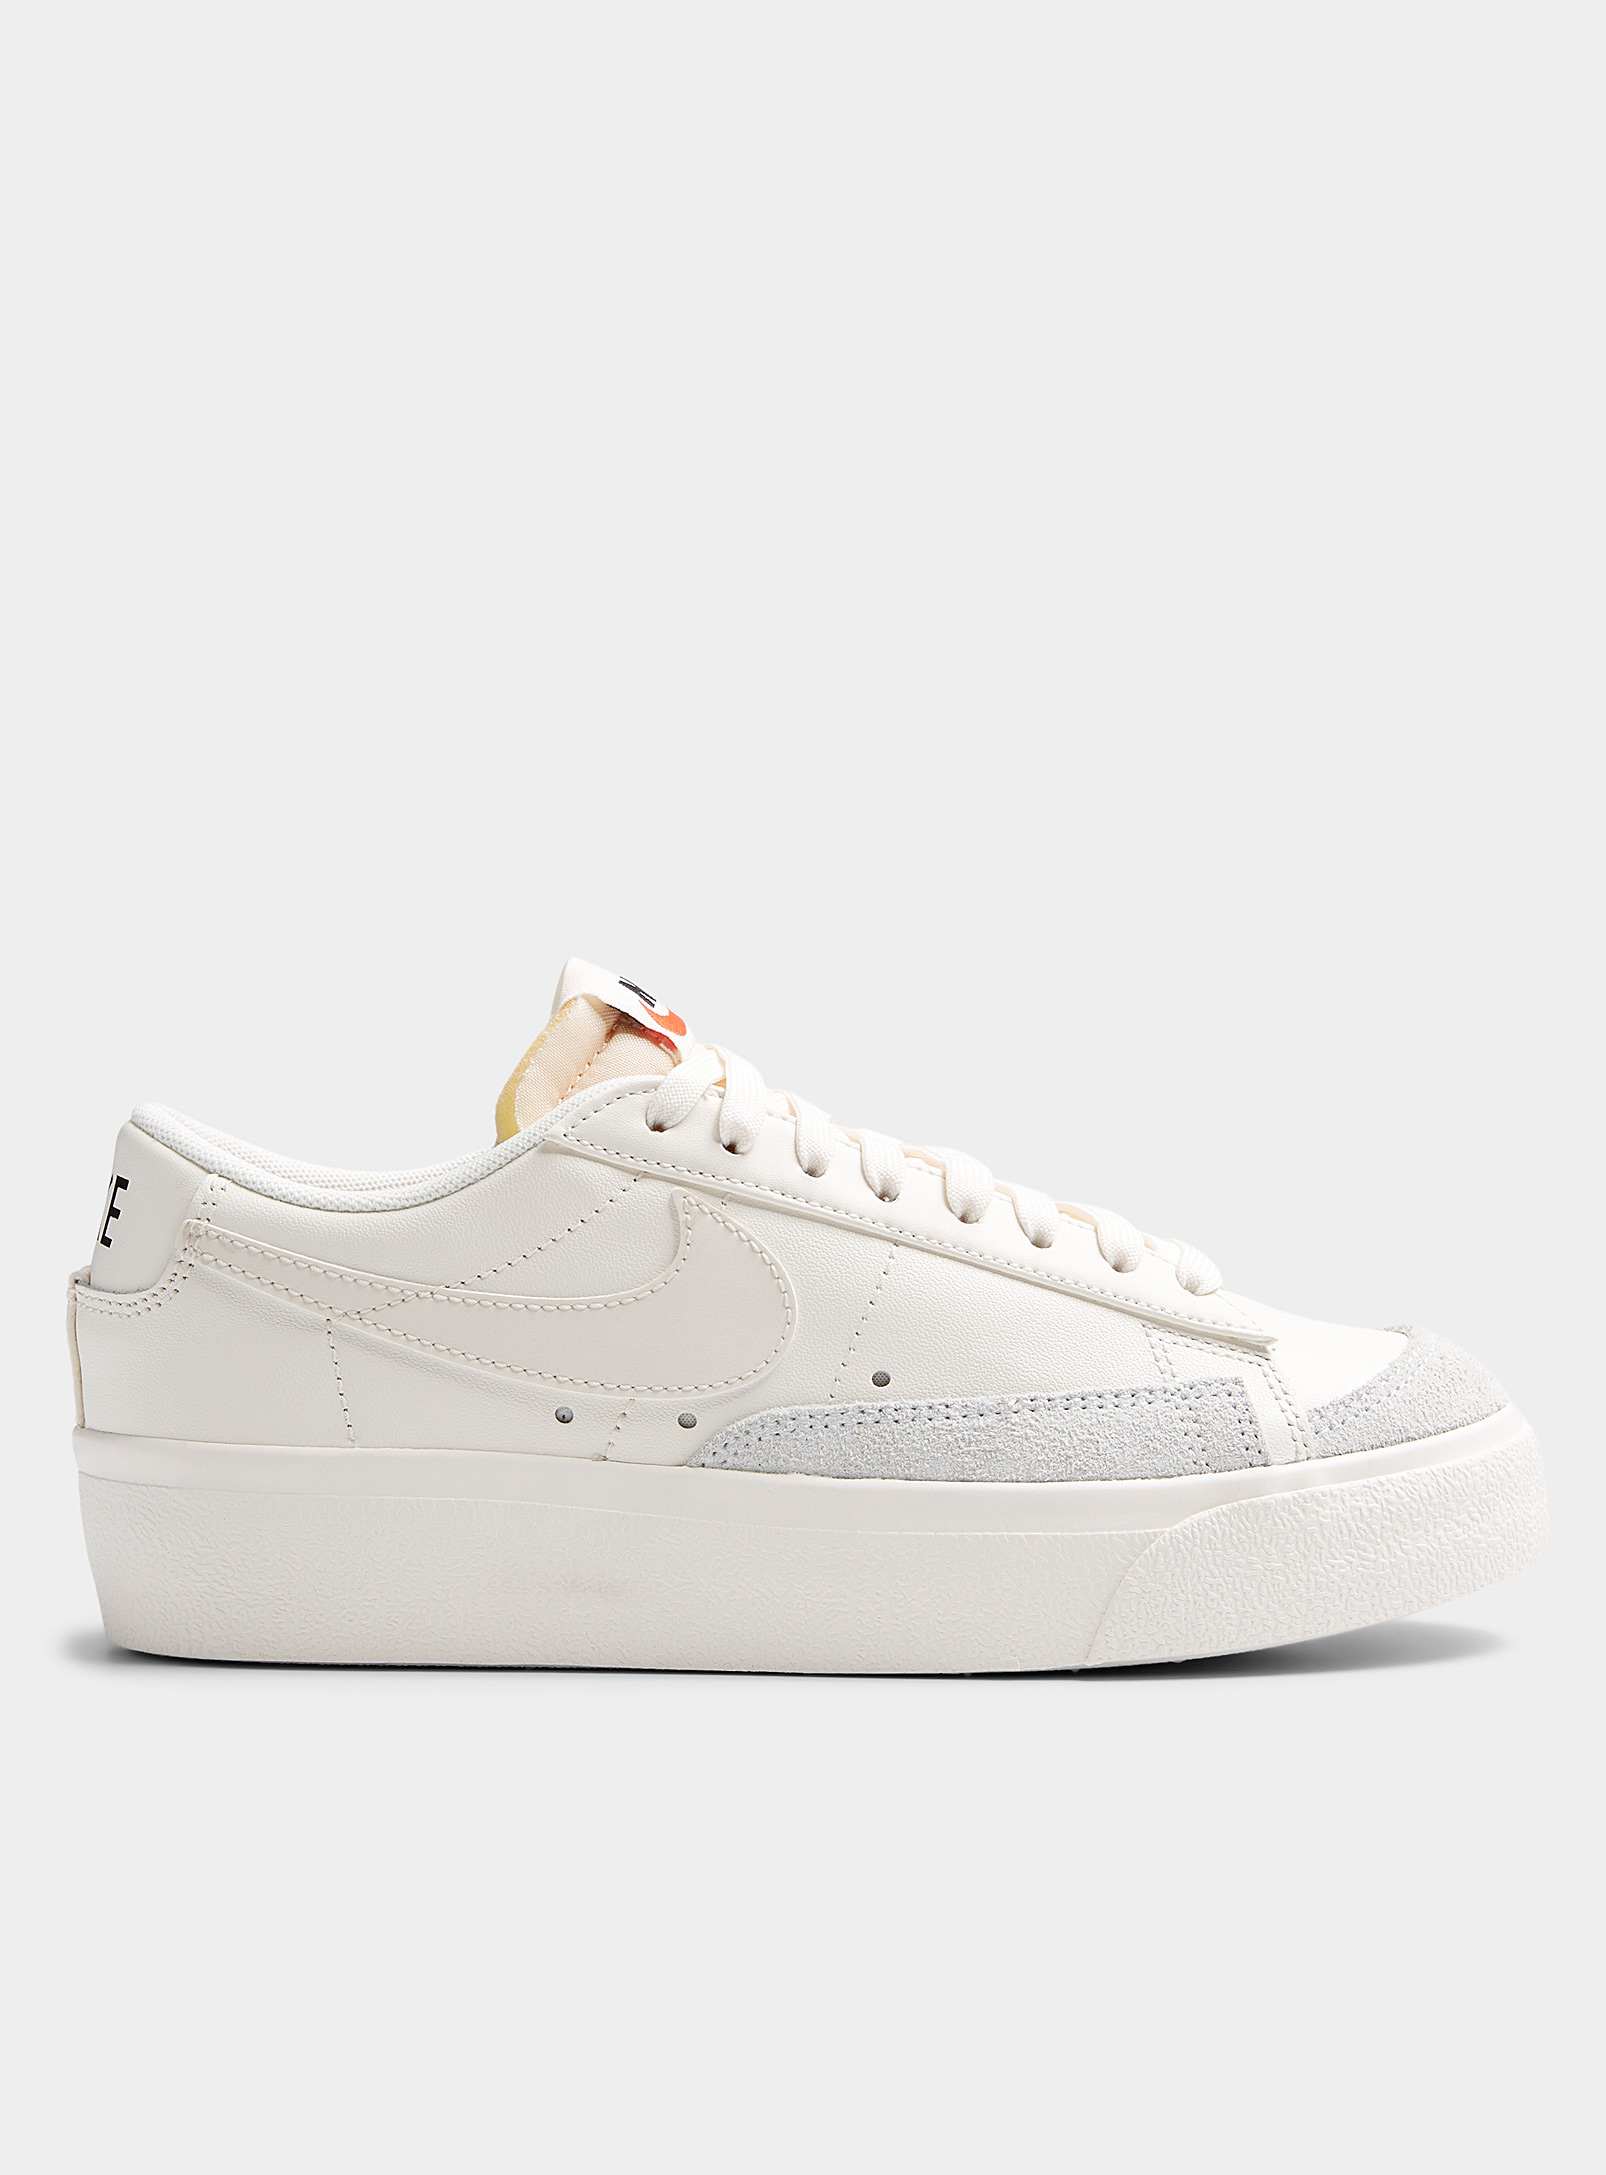 Nike Blazer Low Grey And Voile White Platform Sneakers Women